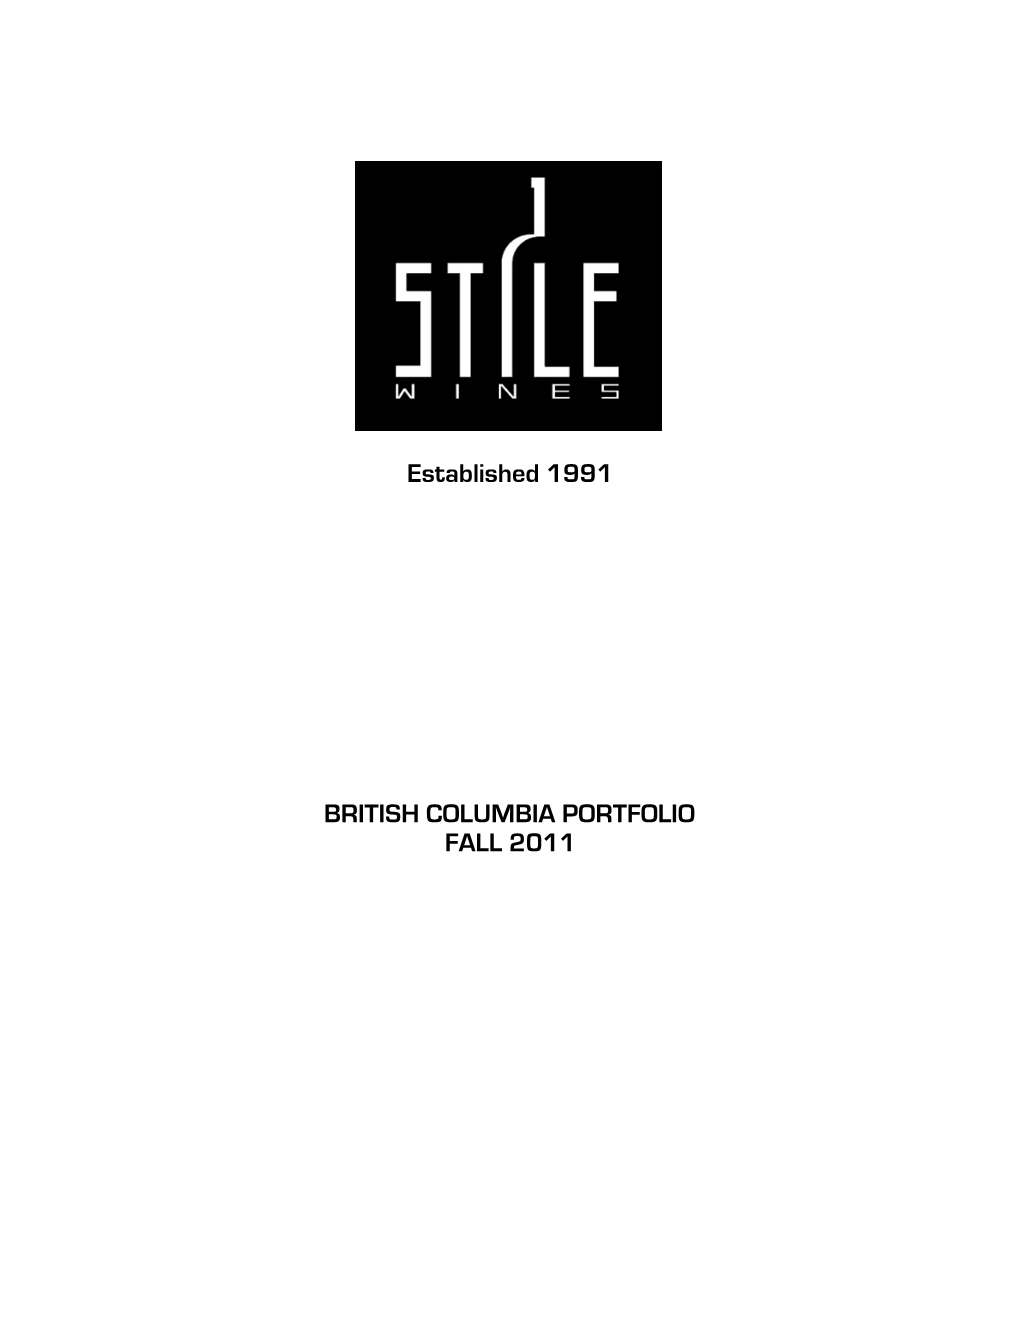 BRITISH COLUMBIA PORTFOLIO FALL 2011 Established 1991